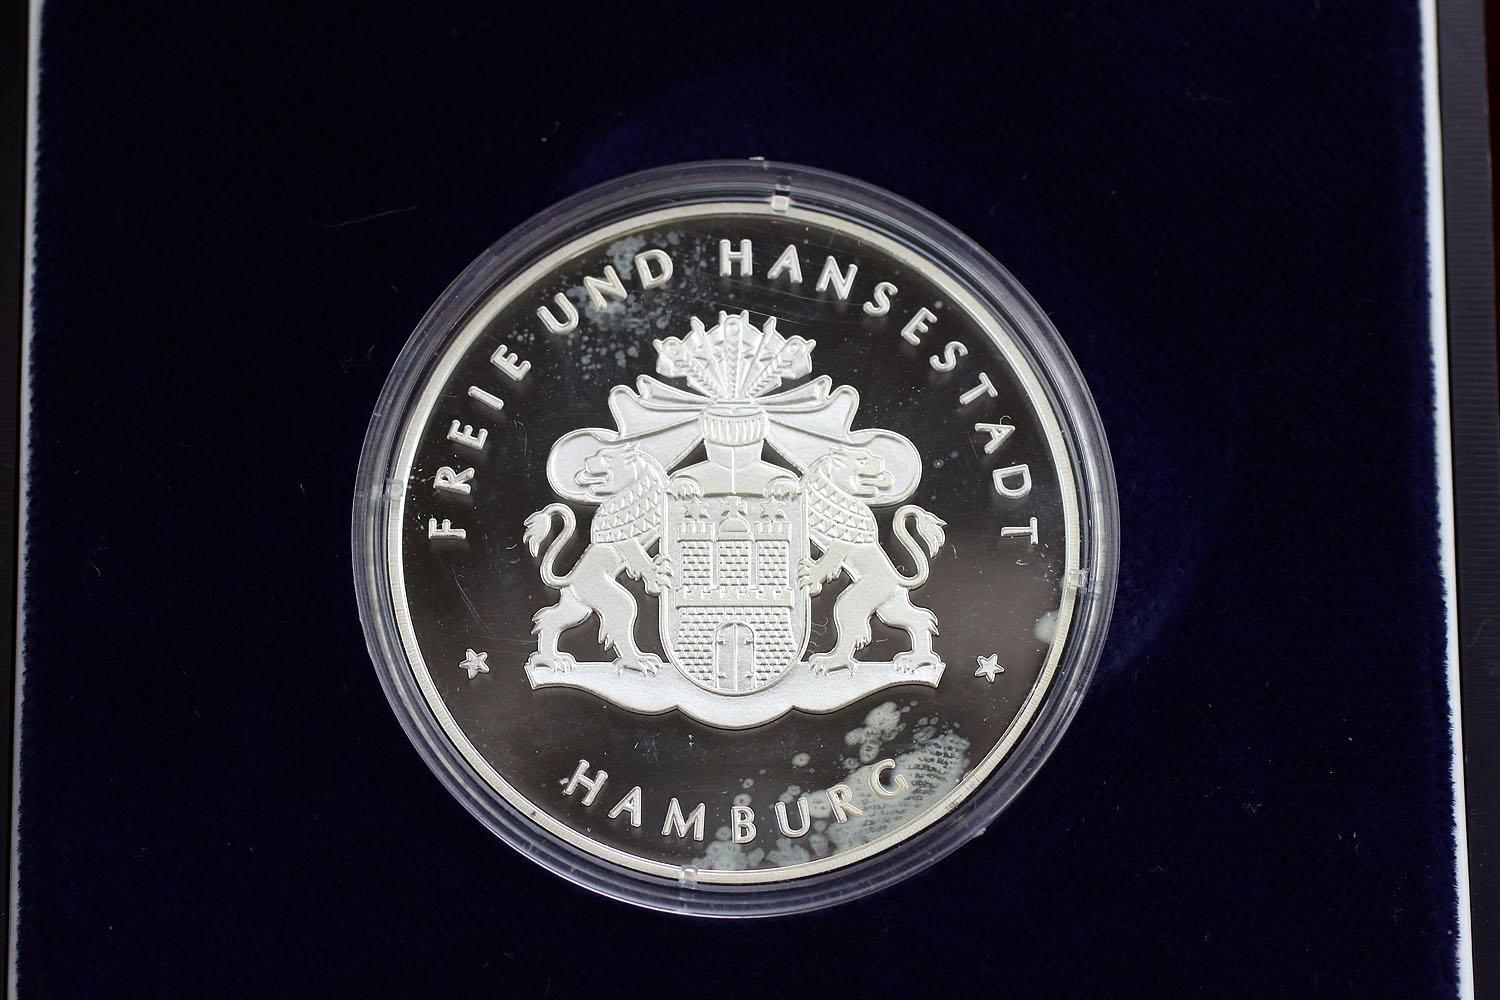 1989 Hamburgs Hafen Wird 800 Silver Coin, Germany